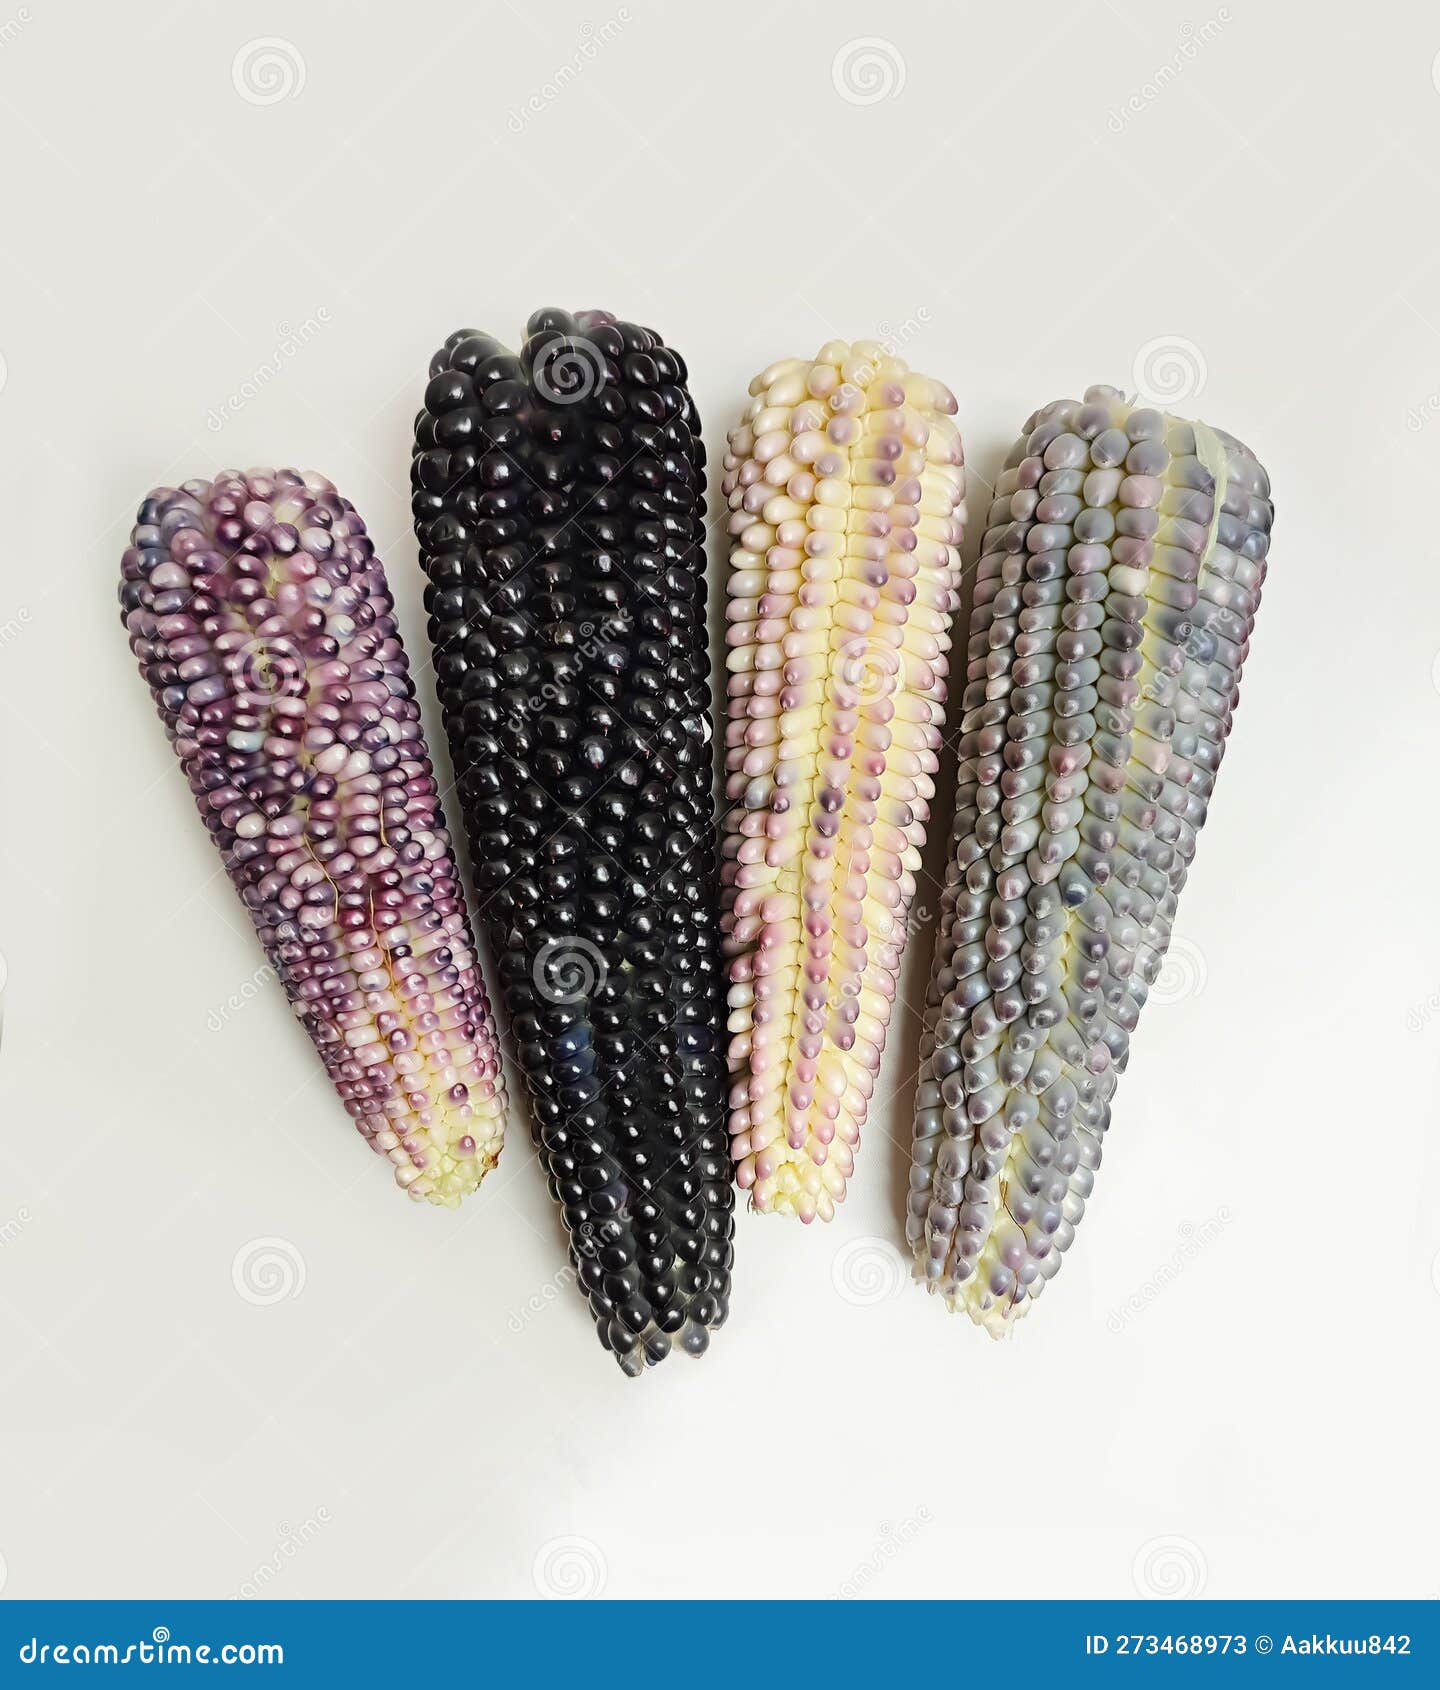 blue corn, purple corn on white background, harvest agricultura